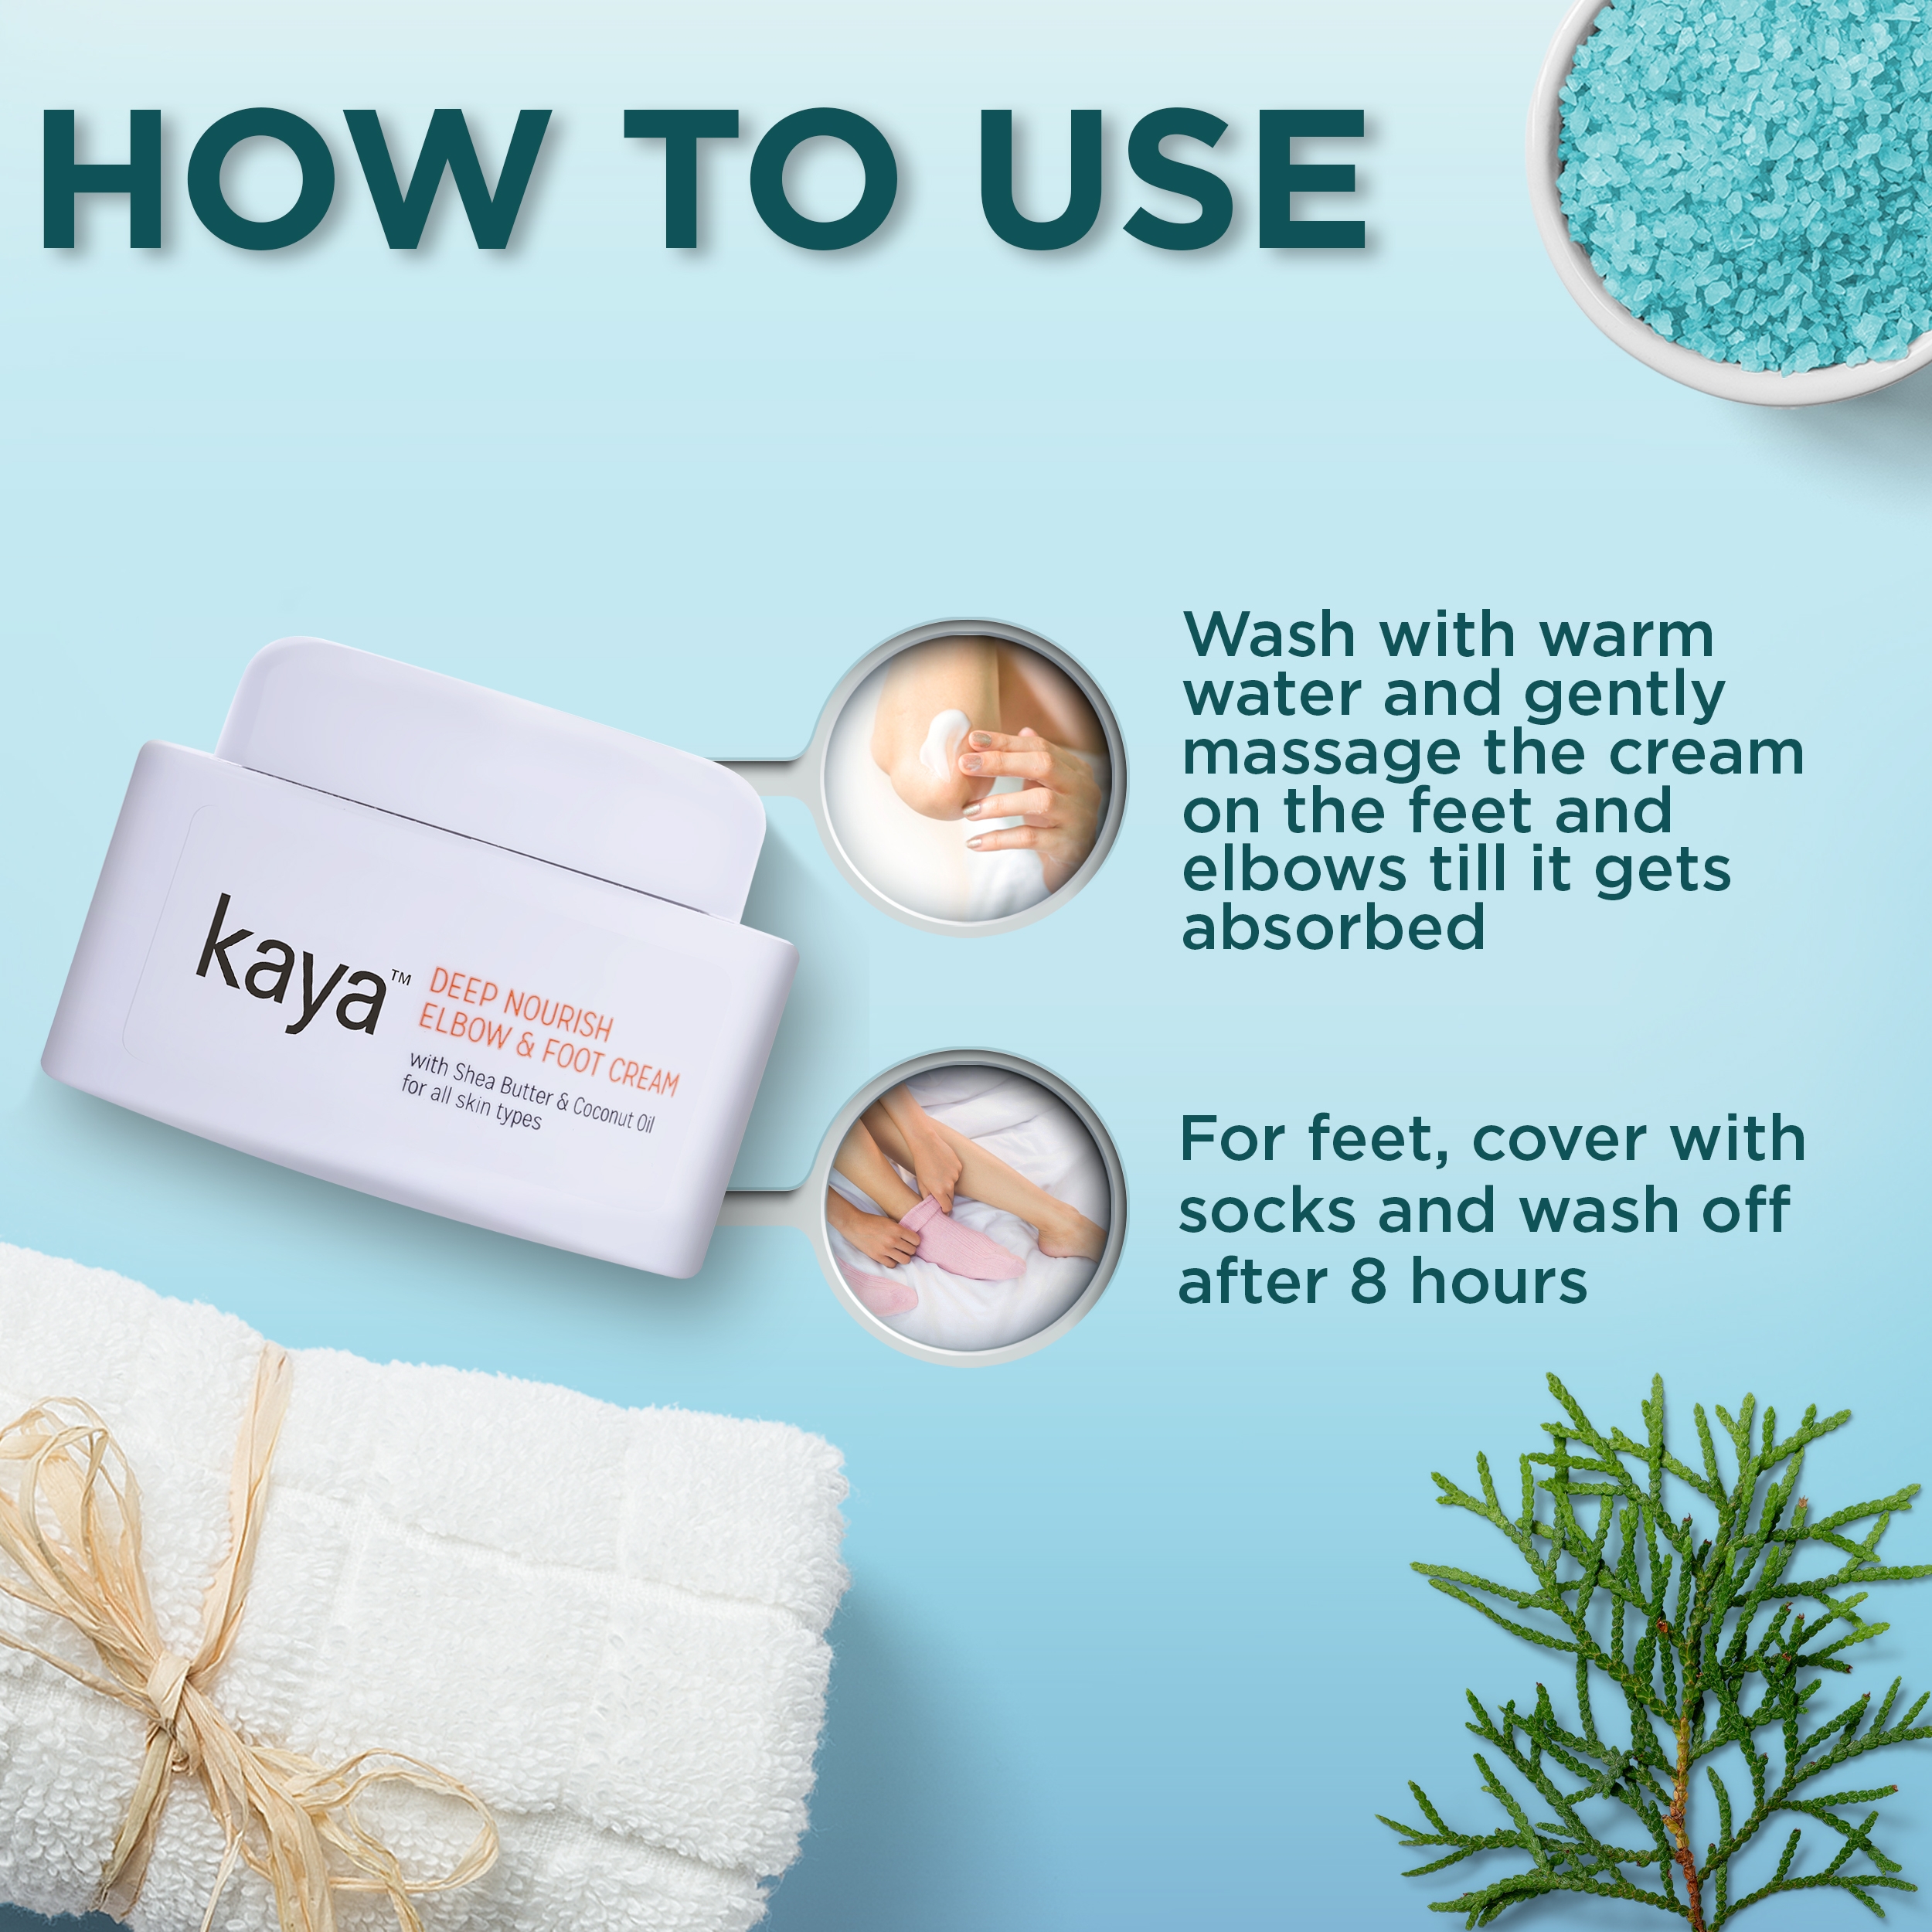 Kaya | kaya Deep Nourish Elbow & Foot Cream 4